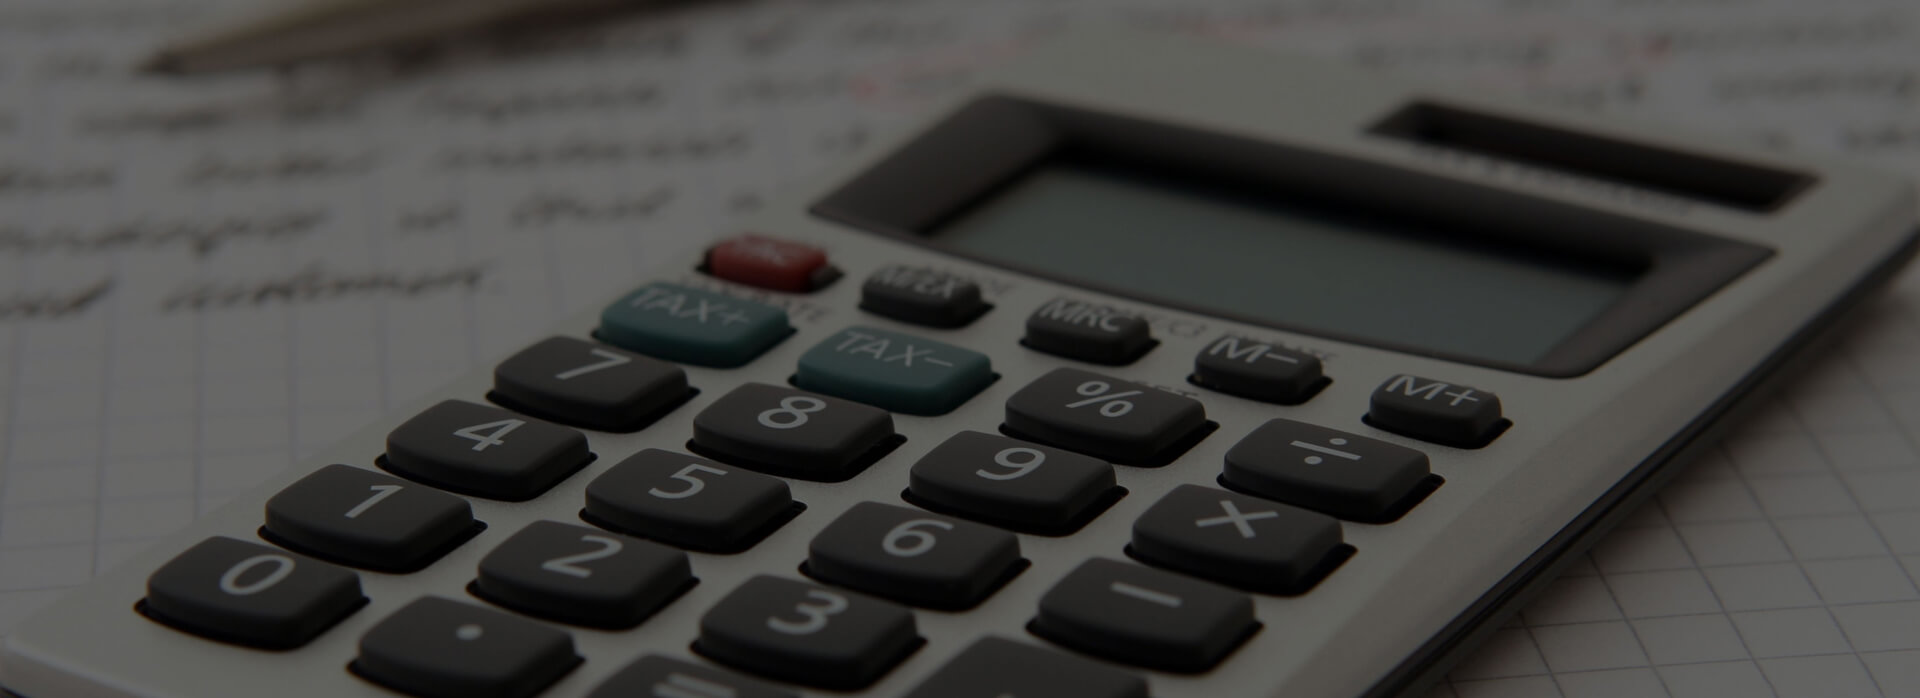 Free Tax Refund Estimate Calculator